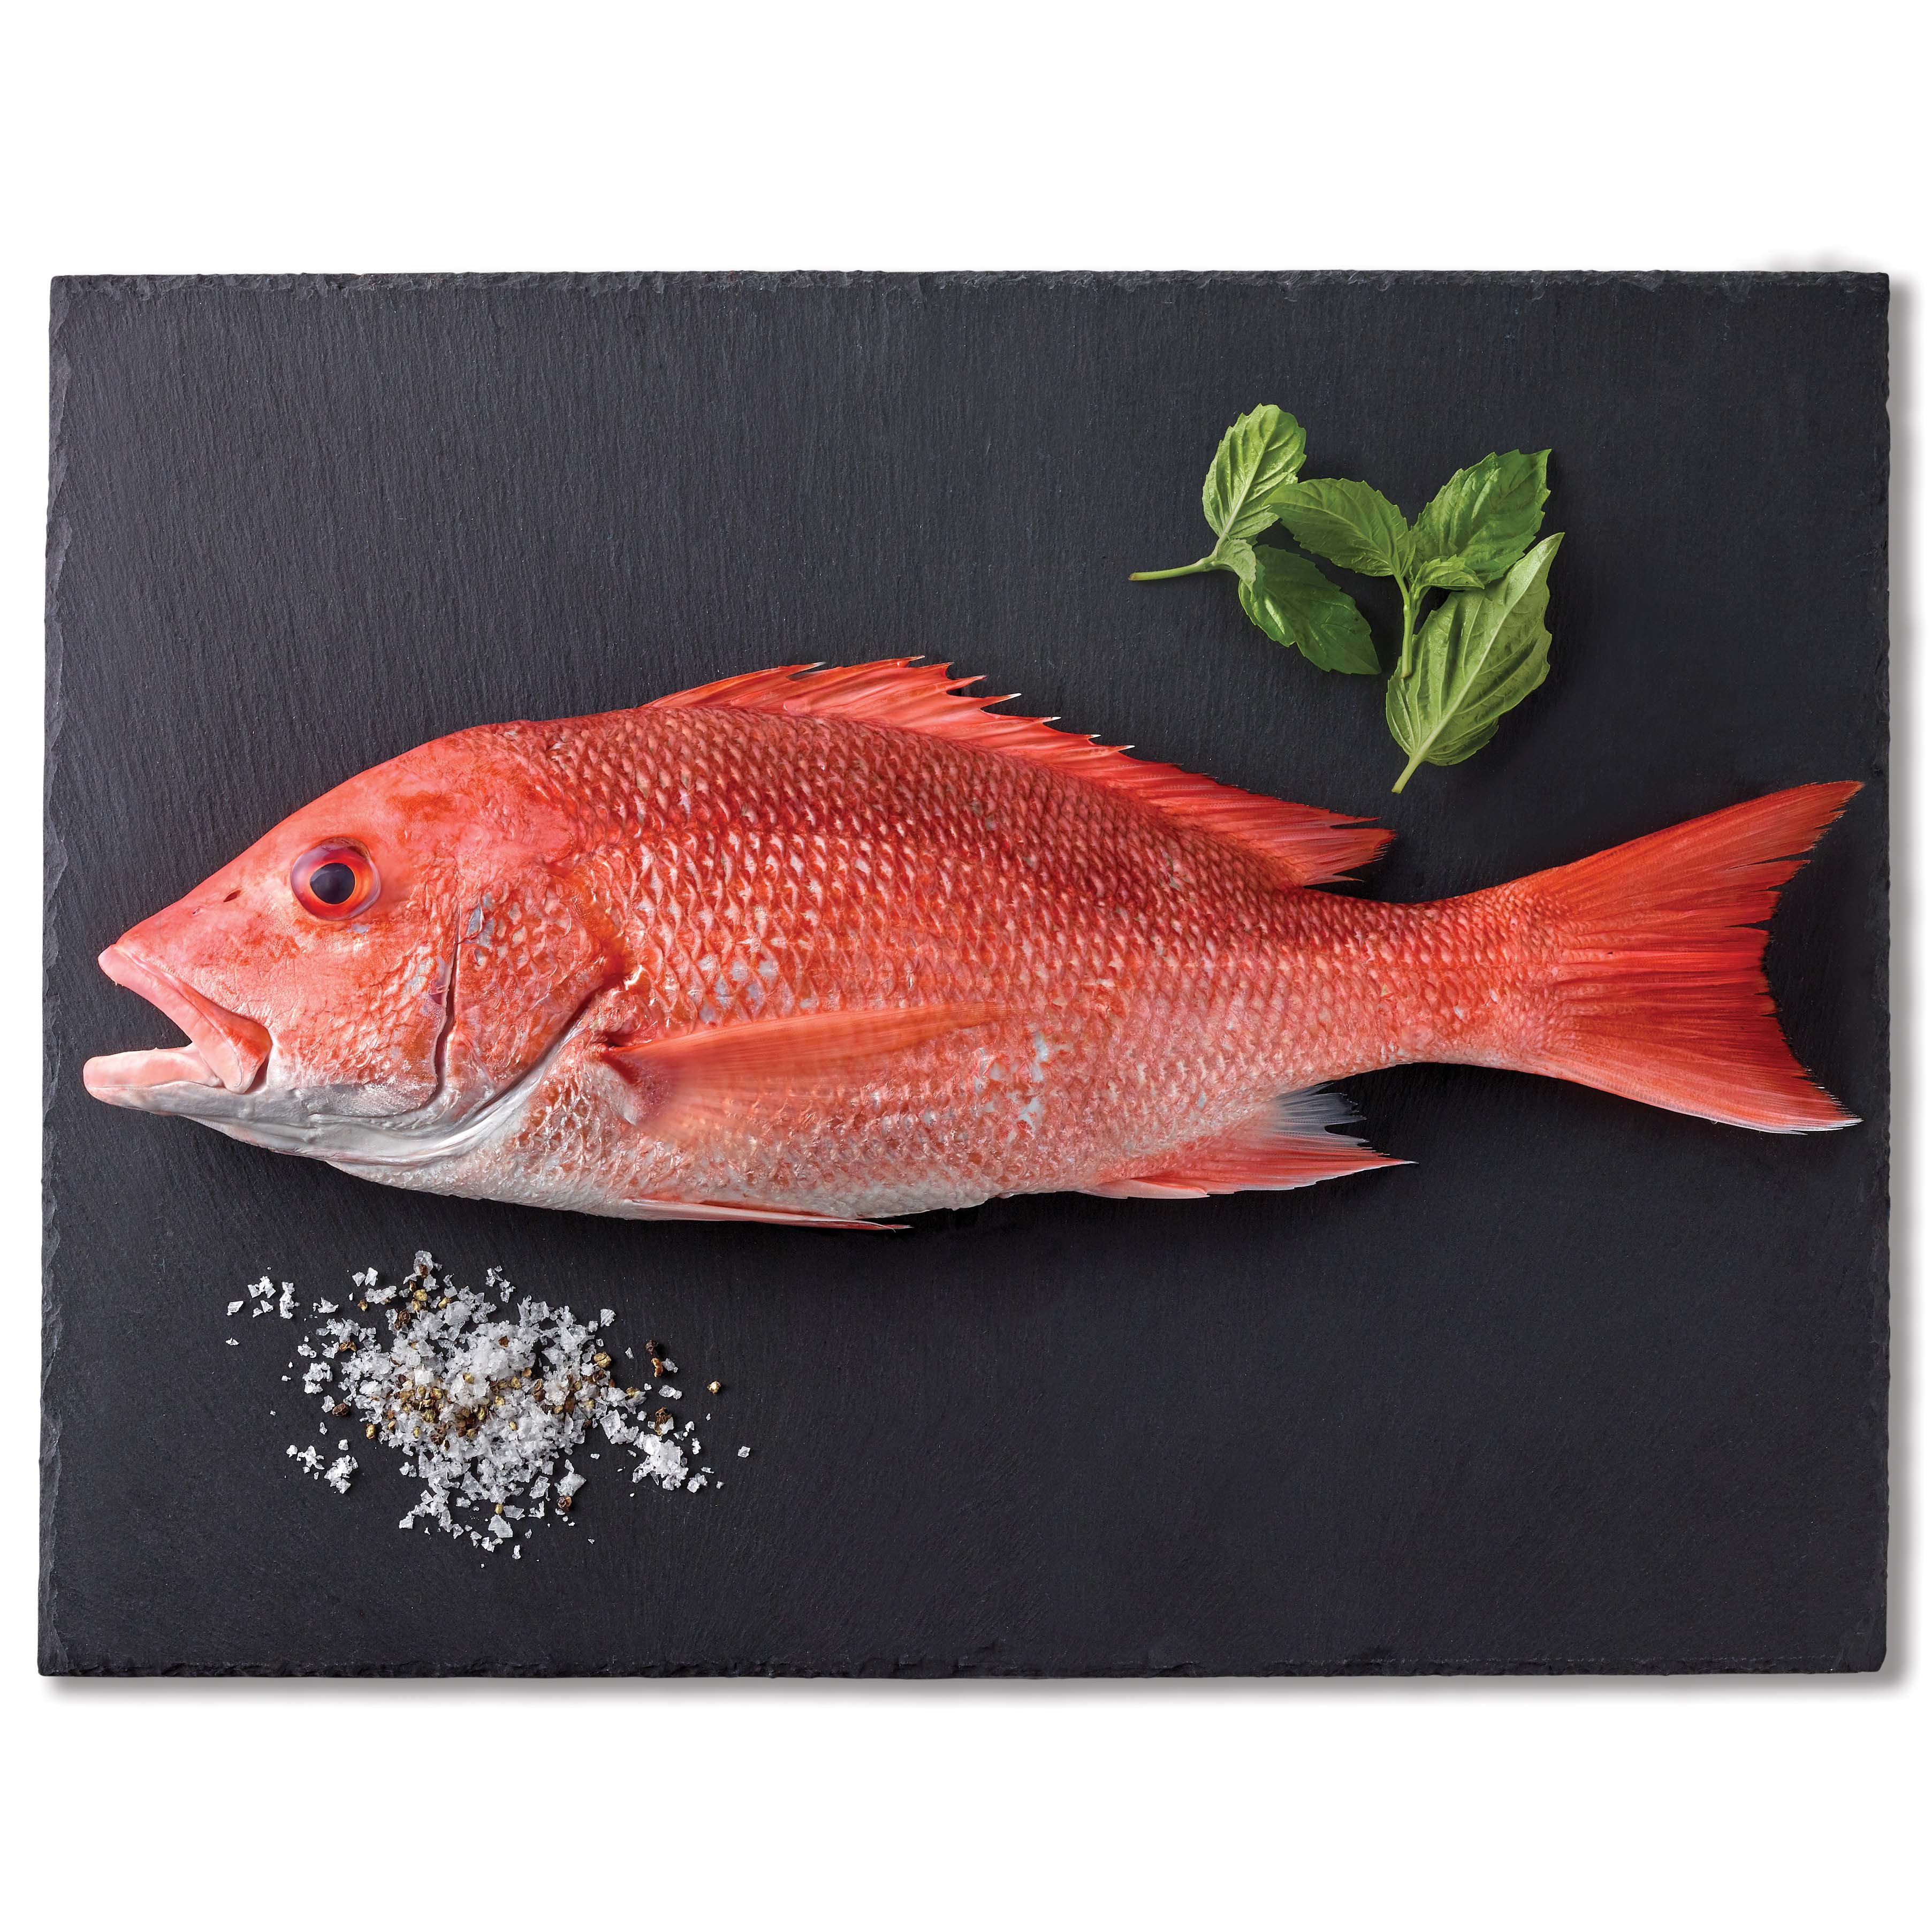 H-E-B Wild Caught Fresh Whole American Red Snapper - Shop Fish at H-E-B